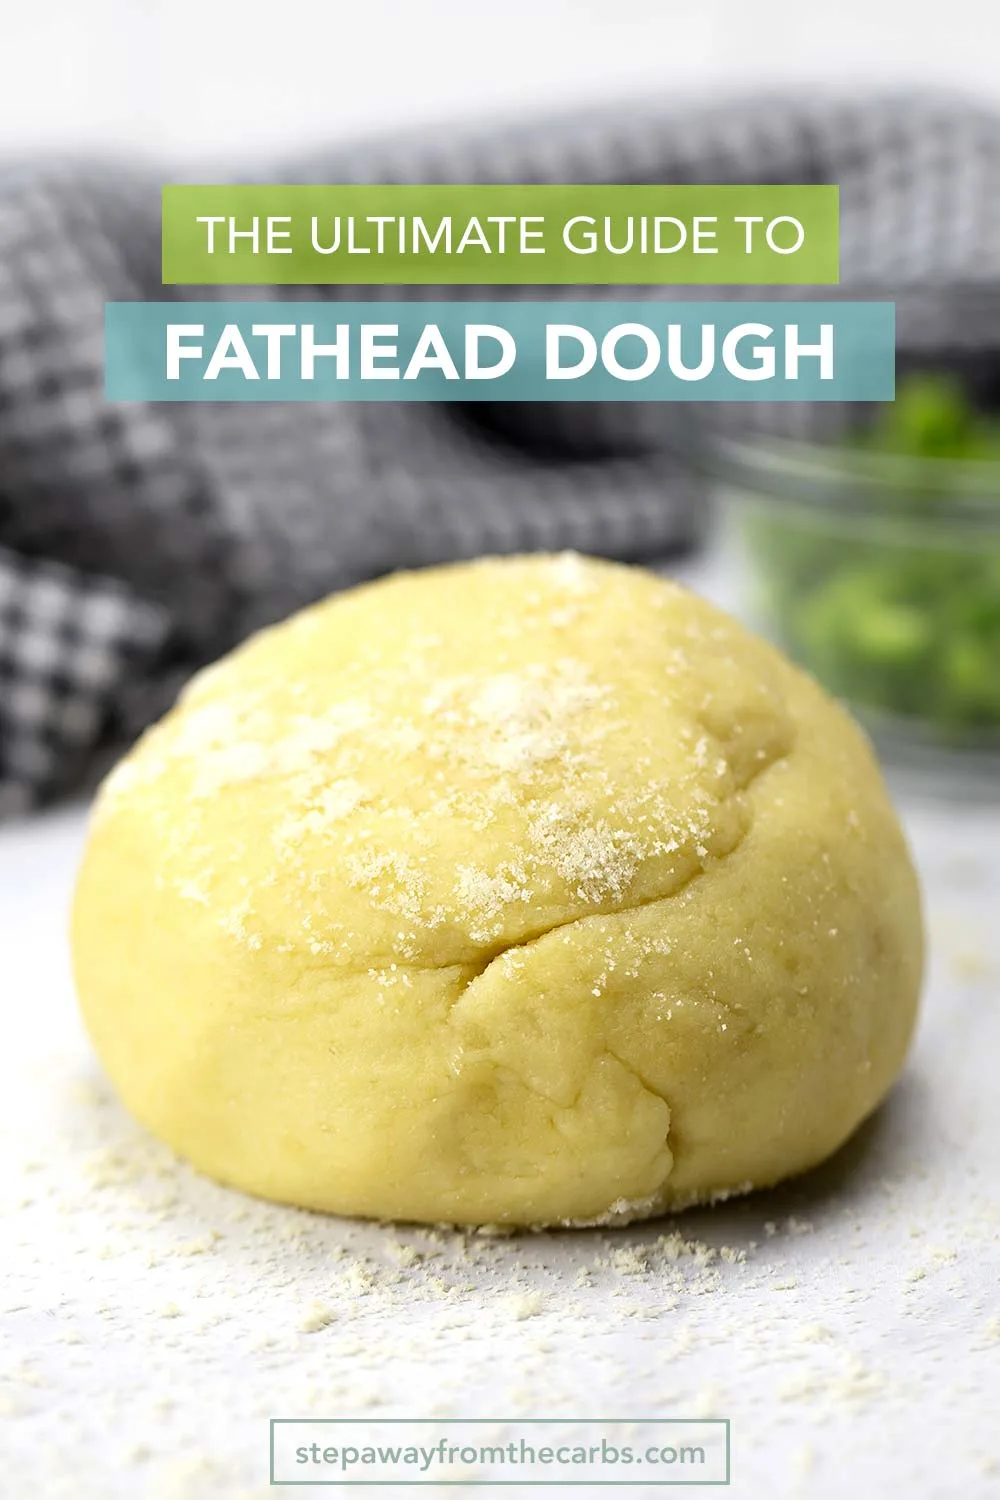 The Ultimate Guide to Fathead Dough